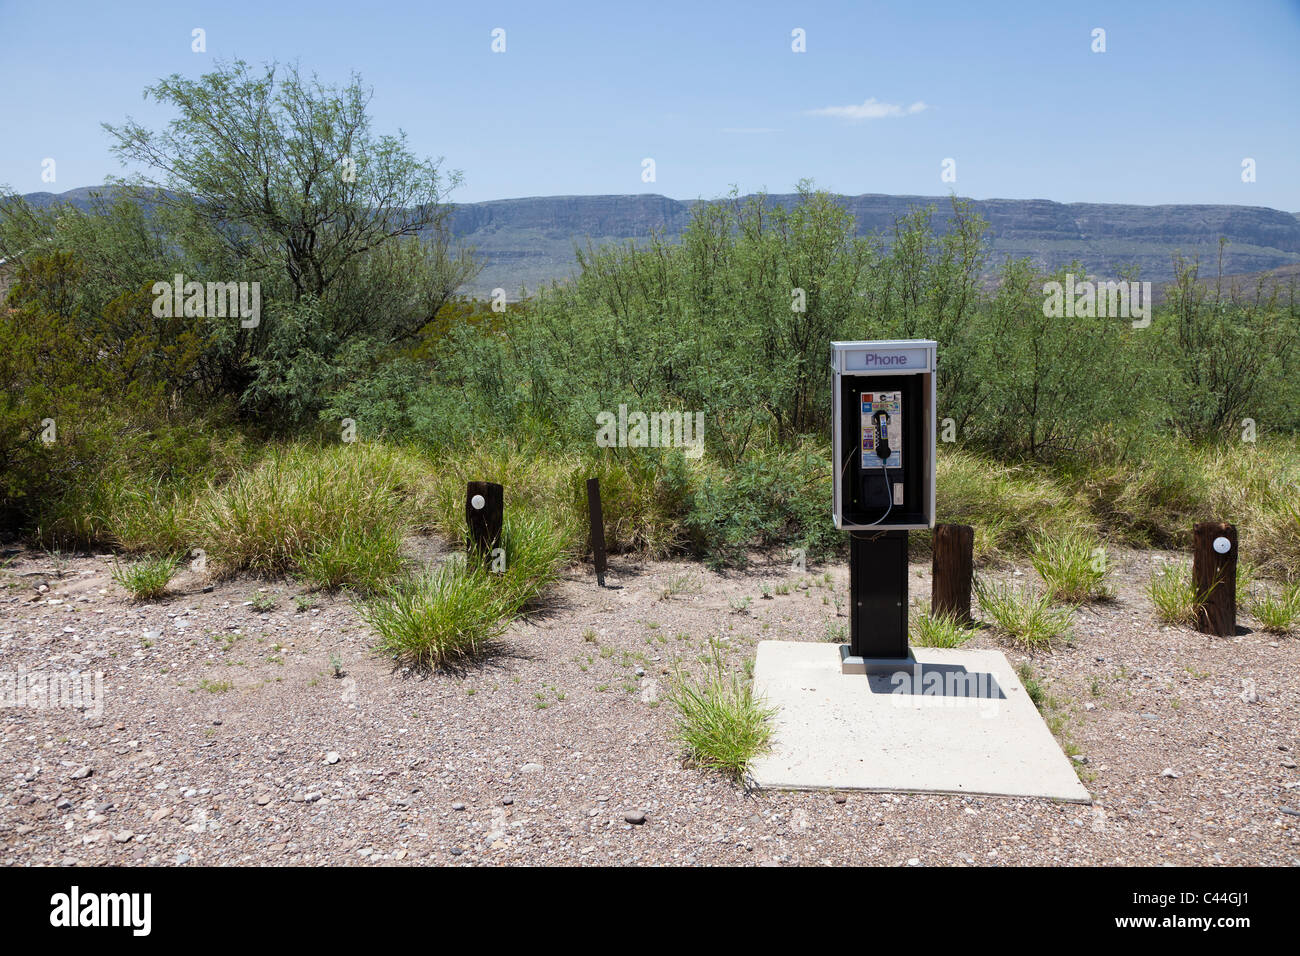 Telefonzelle in Wüste bei Castolon Big Bend Nationalpark Texas USA Stockfoto